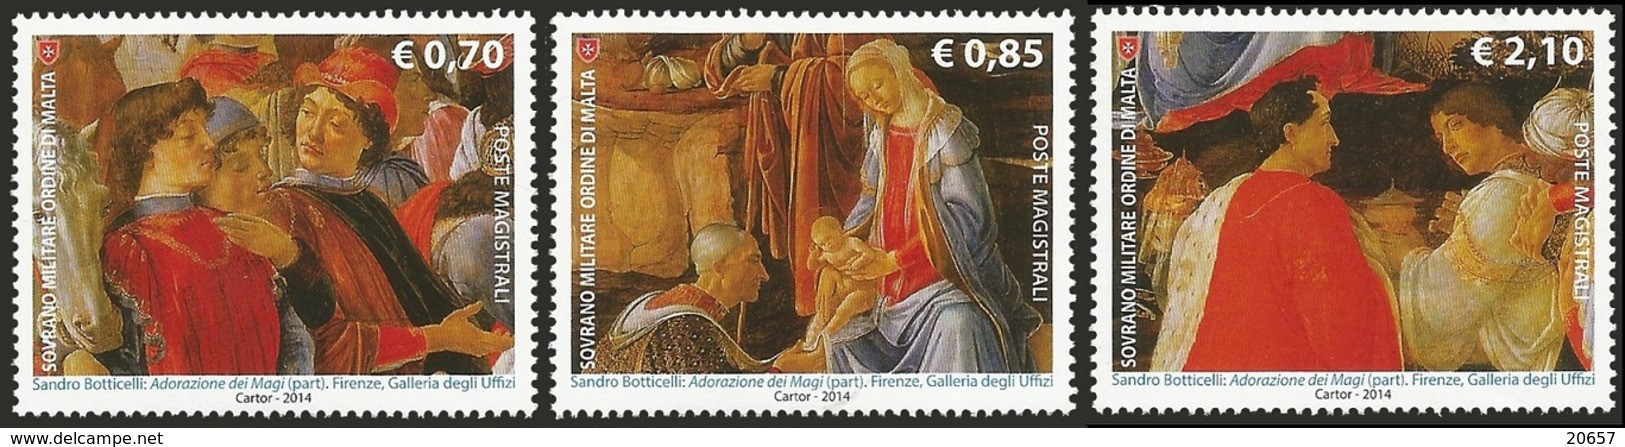 Ordre De Malte SMOM 1232/34 Adoration Des Rois Mages, Botticelli - Religione